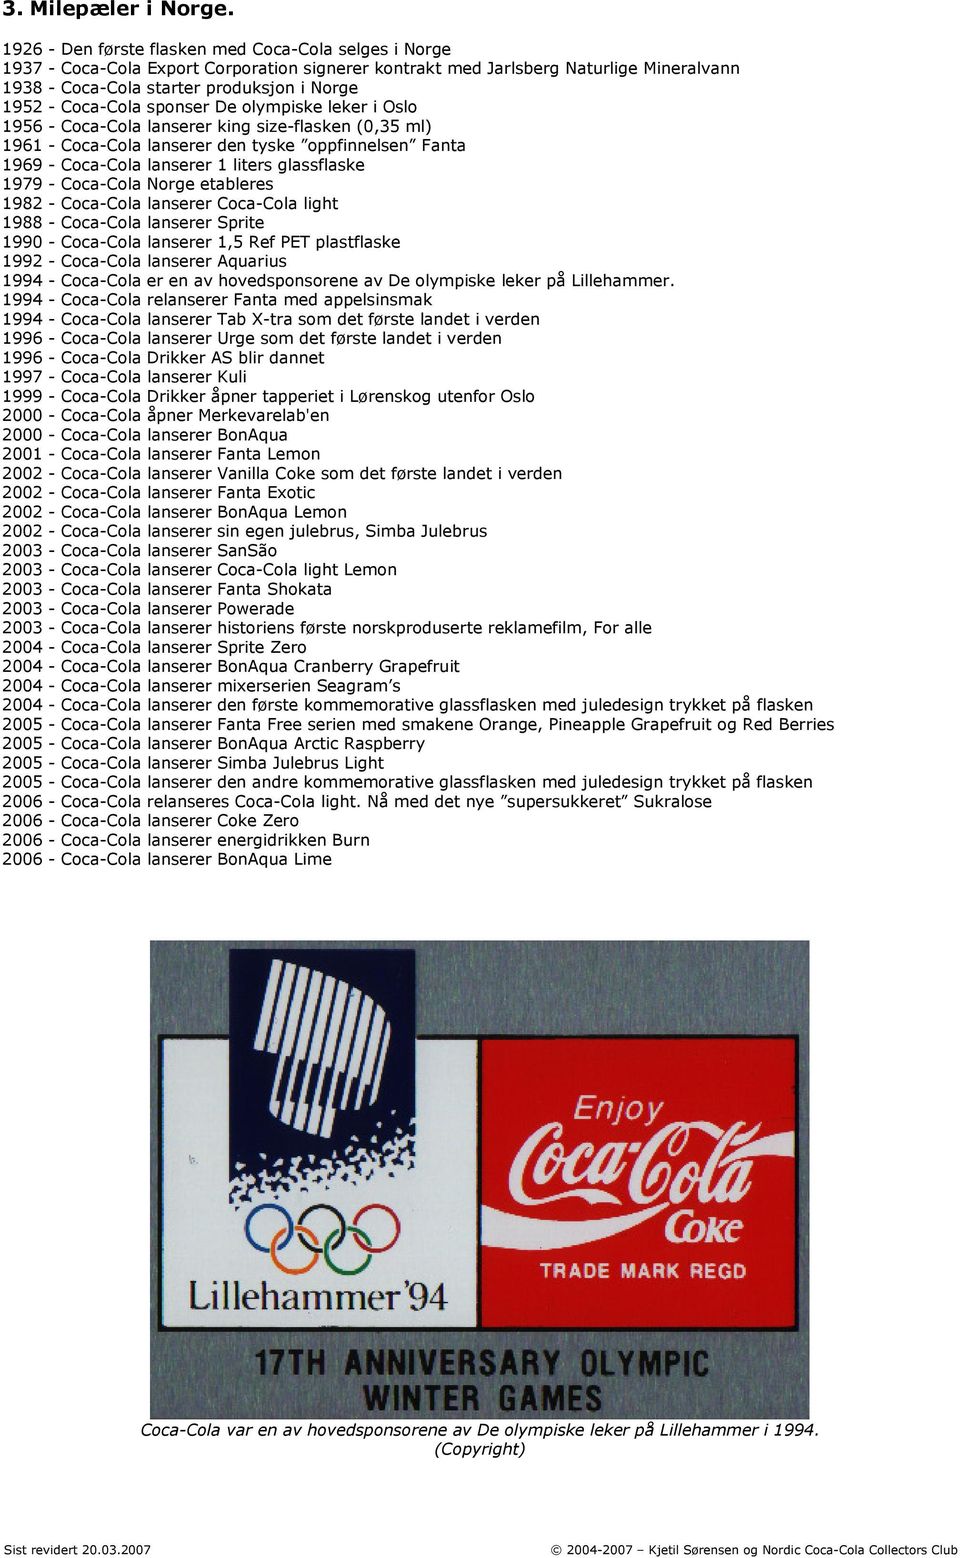 Coca-Cola sponser De olympiske leker i Oslo 1956 - Coca-Cola lanserer king size-flasken (0,35 ml) 1961 - Coca-Cola lanserer den tyske oppfinnelsen Fanta 1969 - Coca-Cola lanserer 1 liters glassflaske